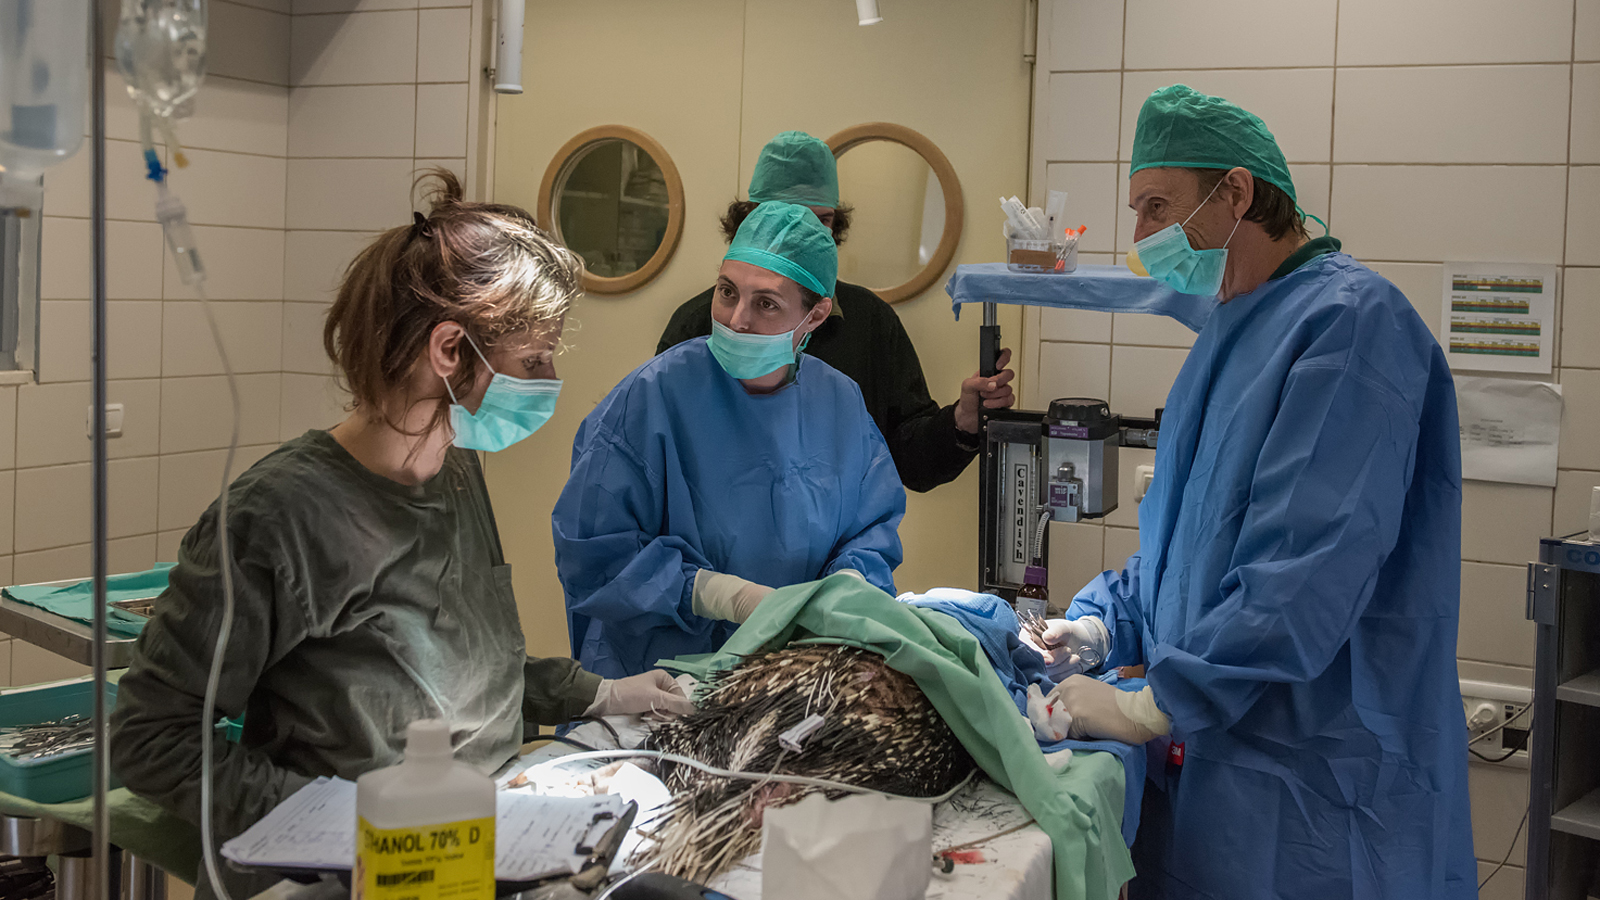 Prickly patient undergoes lifesaving blepharoplasty. Photo by Ofer Brill/Ramat Gan Safari 